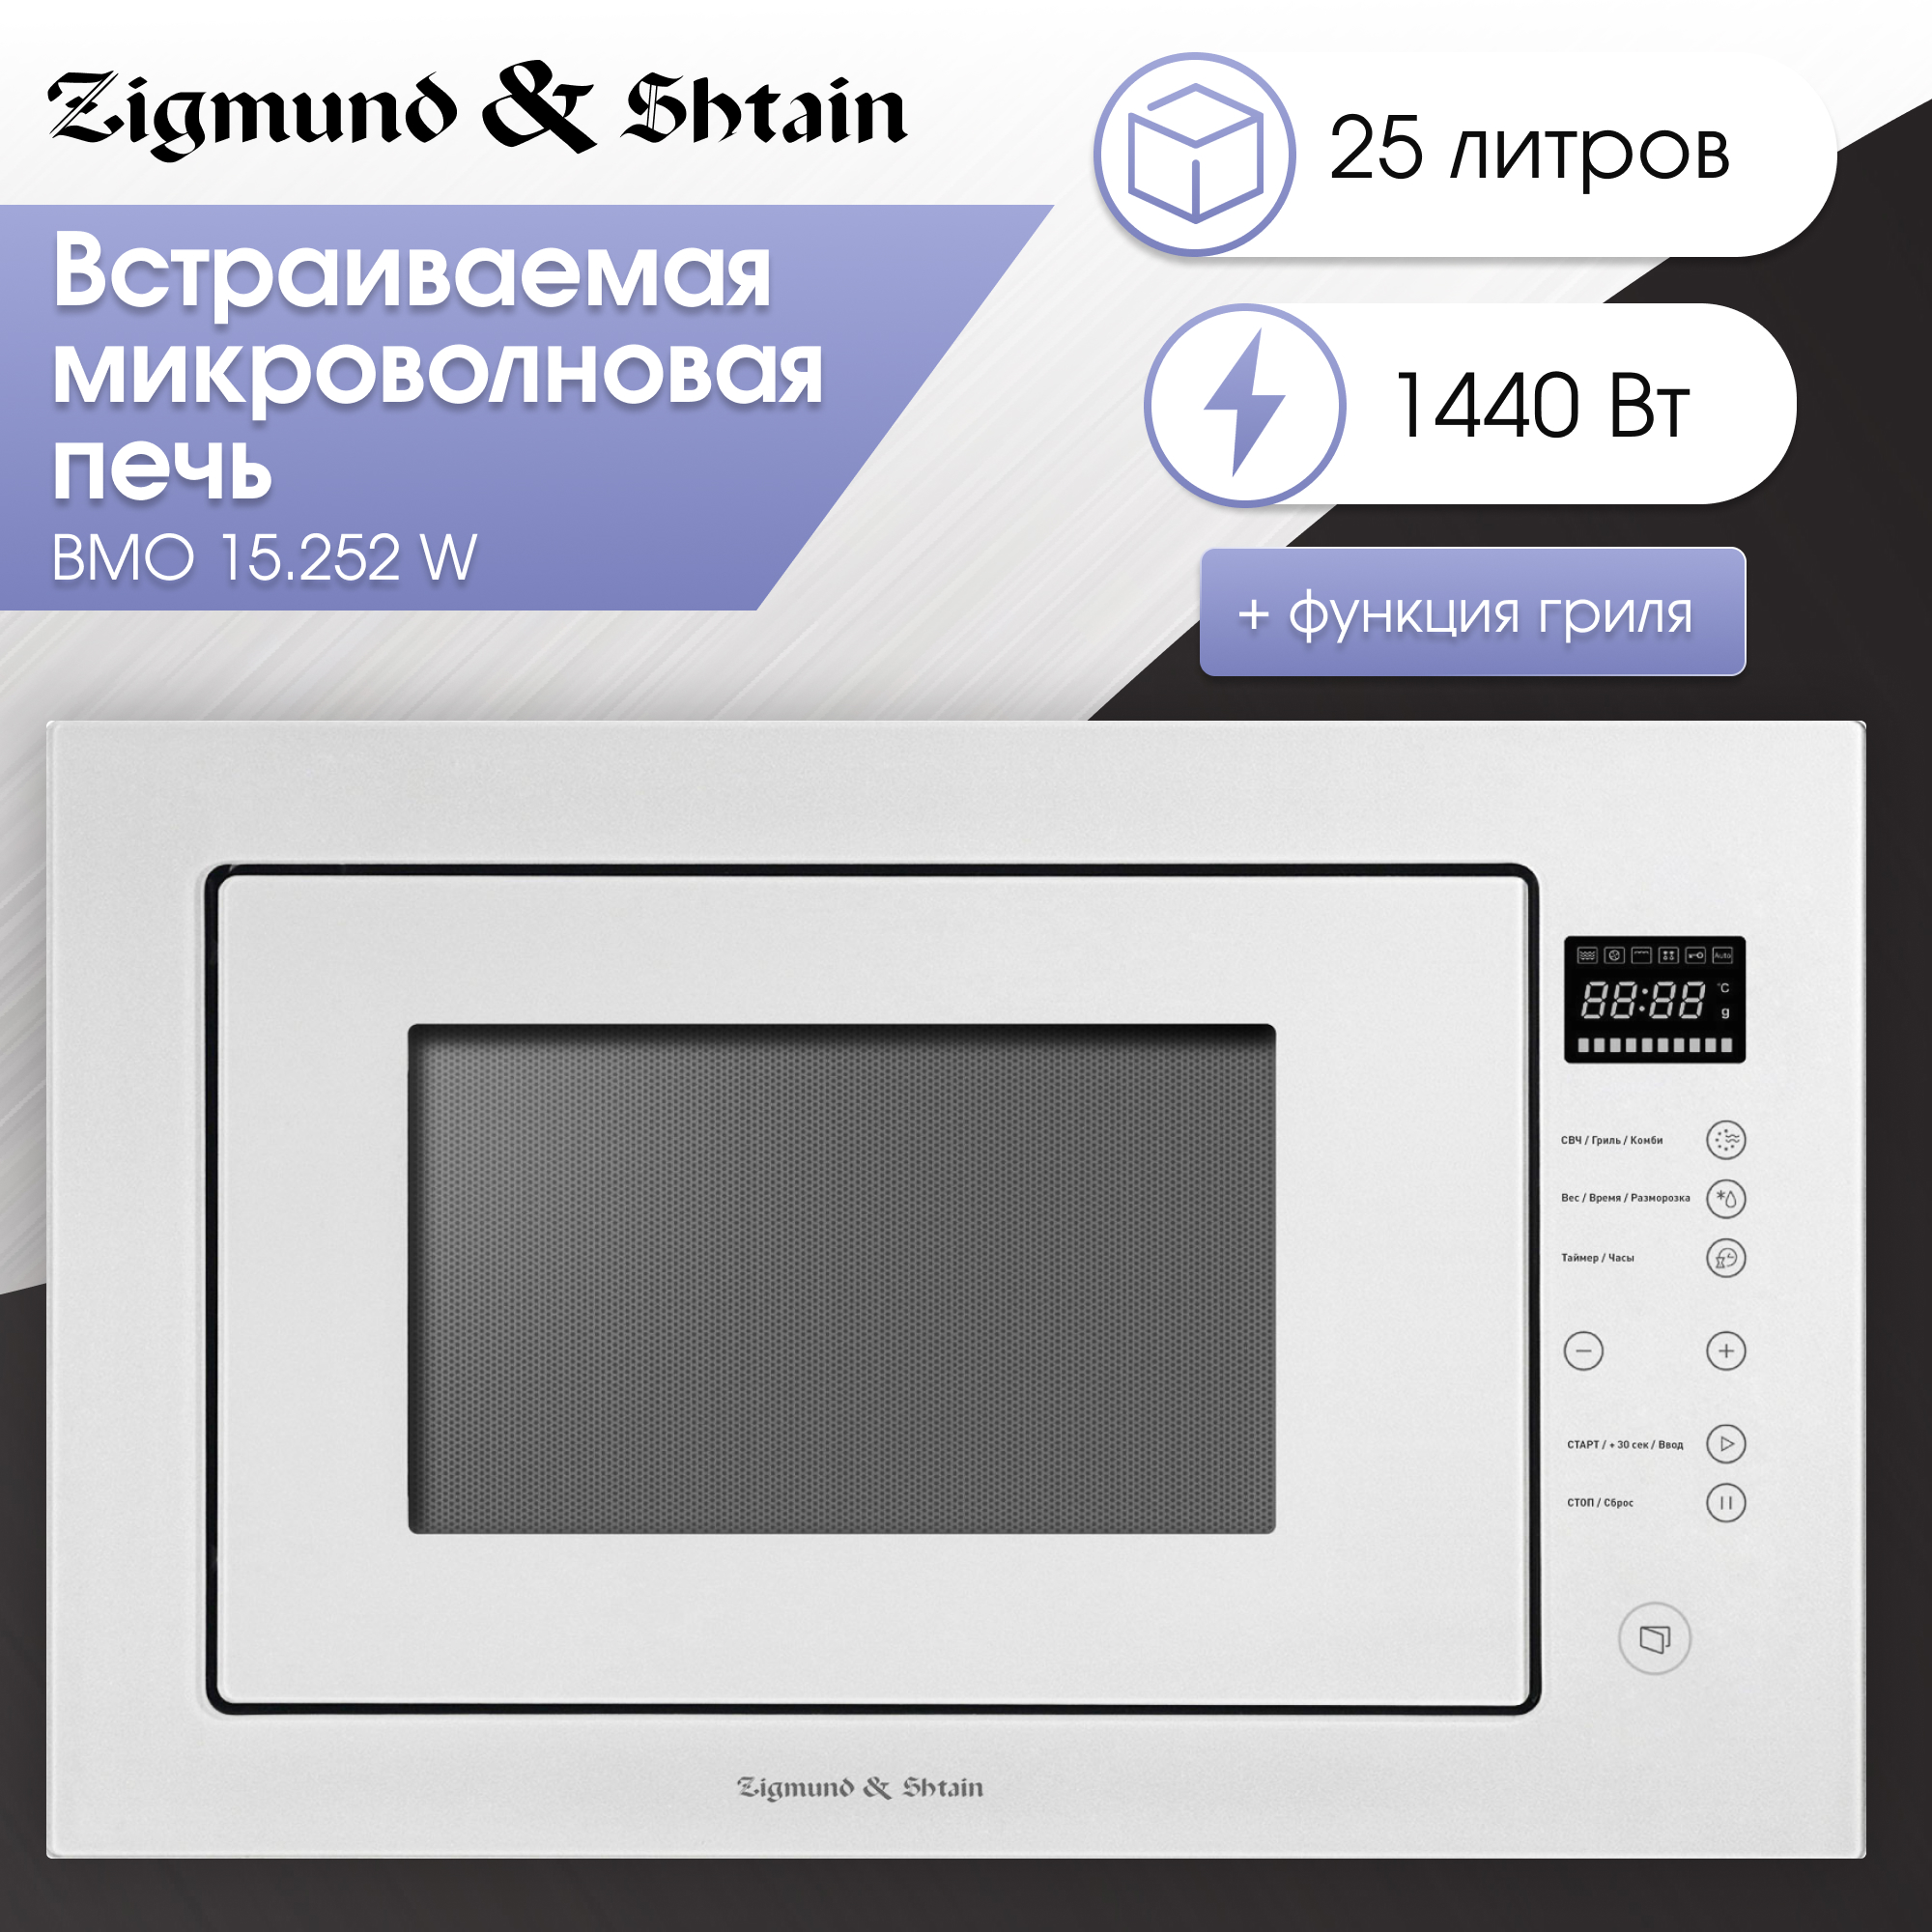 Встраиваемая микроволновая печь Zigmund & Shtain BMO 15.252 W White встраиваемая микроволновая печь lex bimo 20 01 c iv white